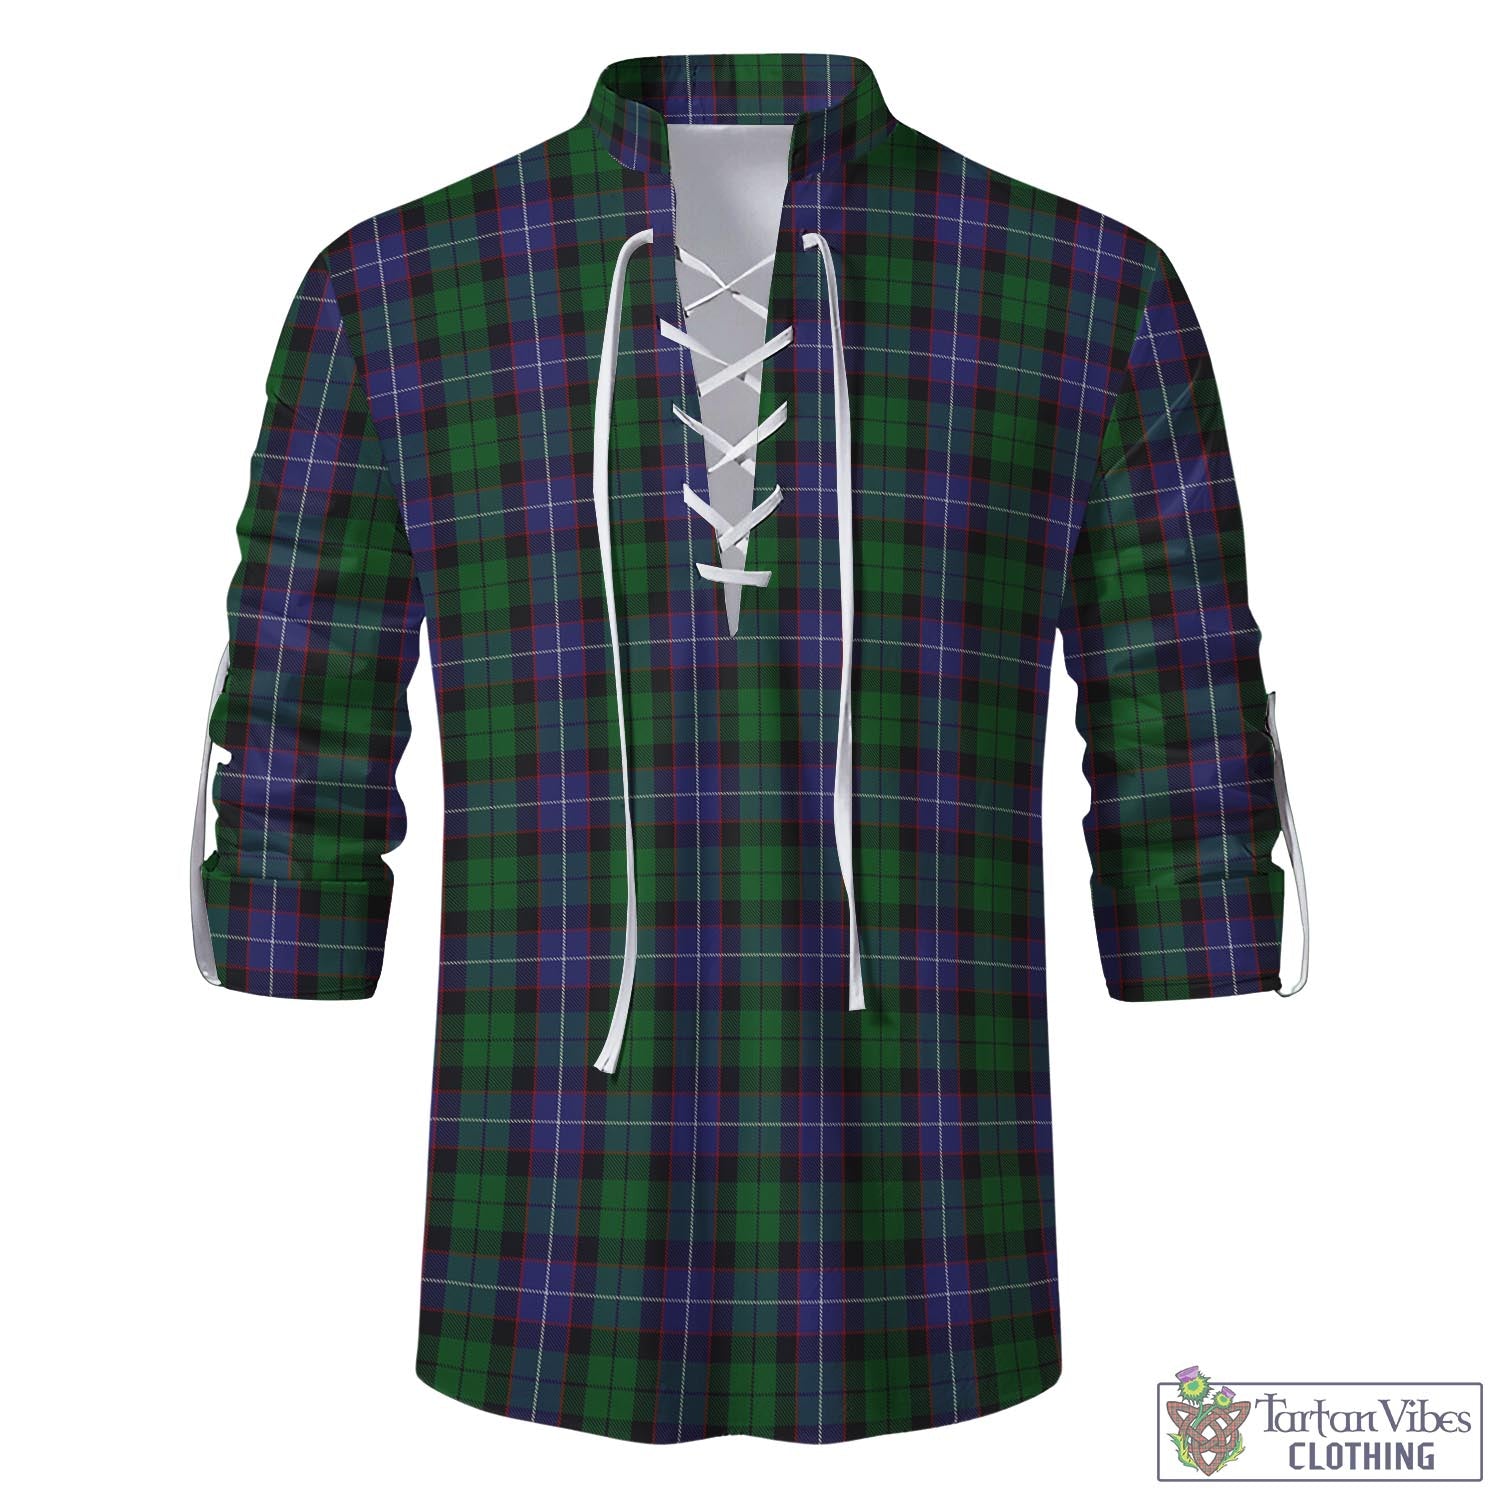 Tartan Vibes Clothing Galbraith Tartan Men's Scottish Traditional Jacobite Ghillie Kilt Shirt